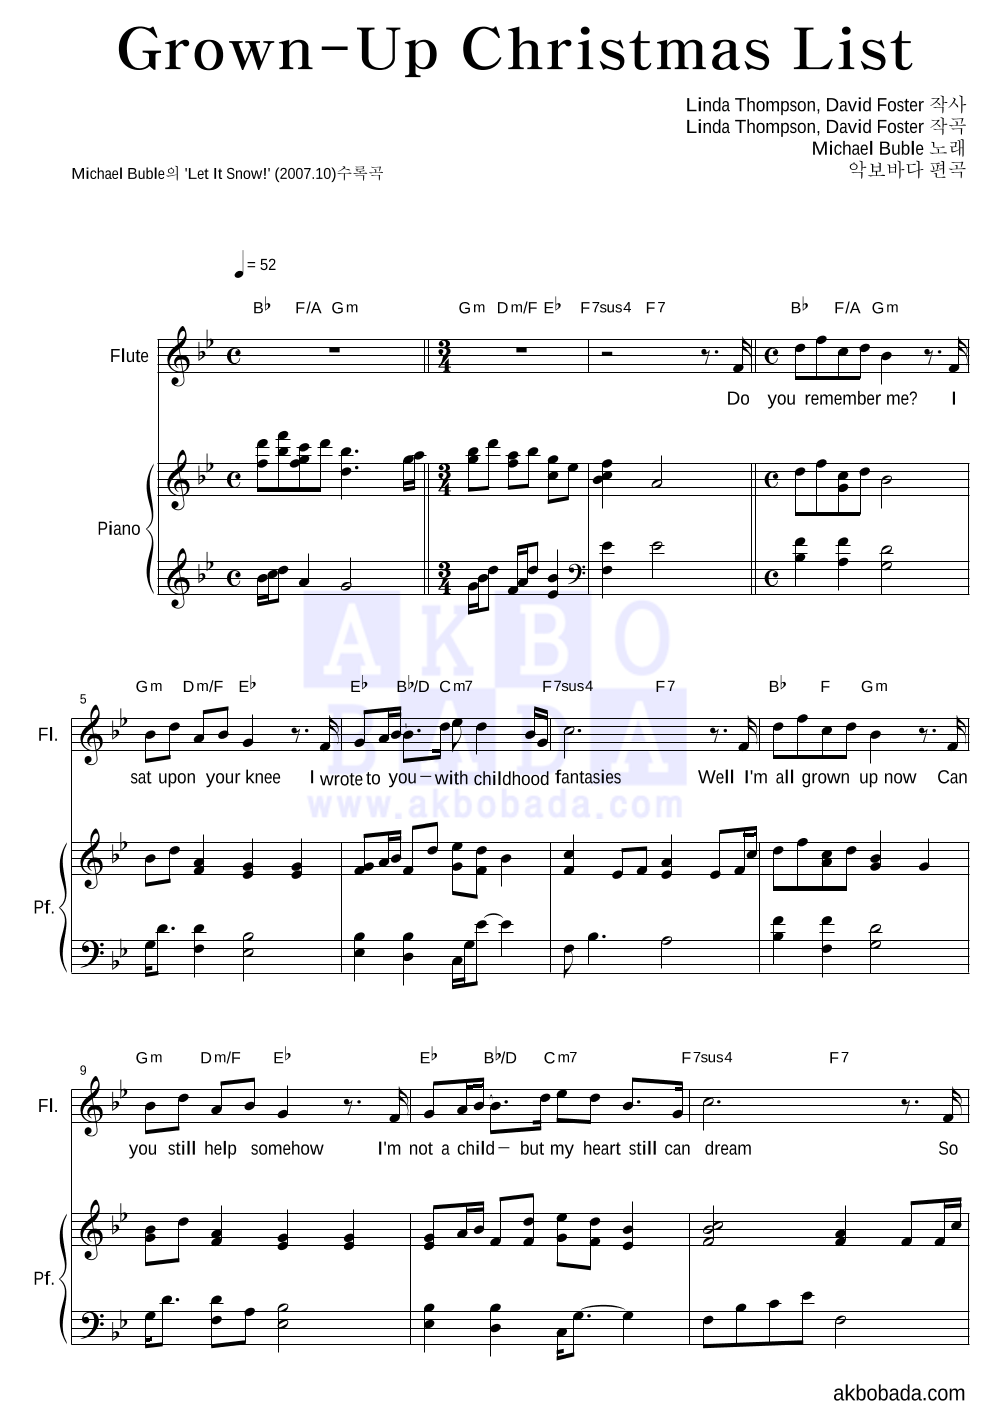 Michael Buble - Grown-Up Christmas List 플룻&피아노 악보 